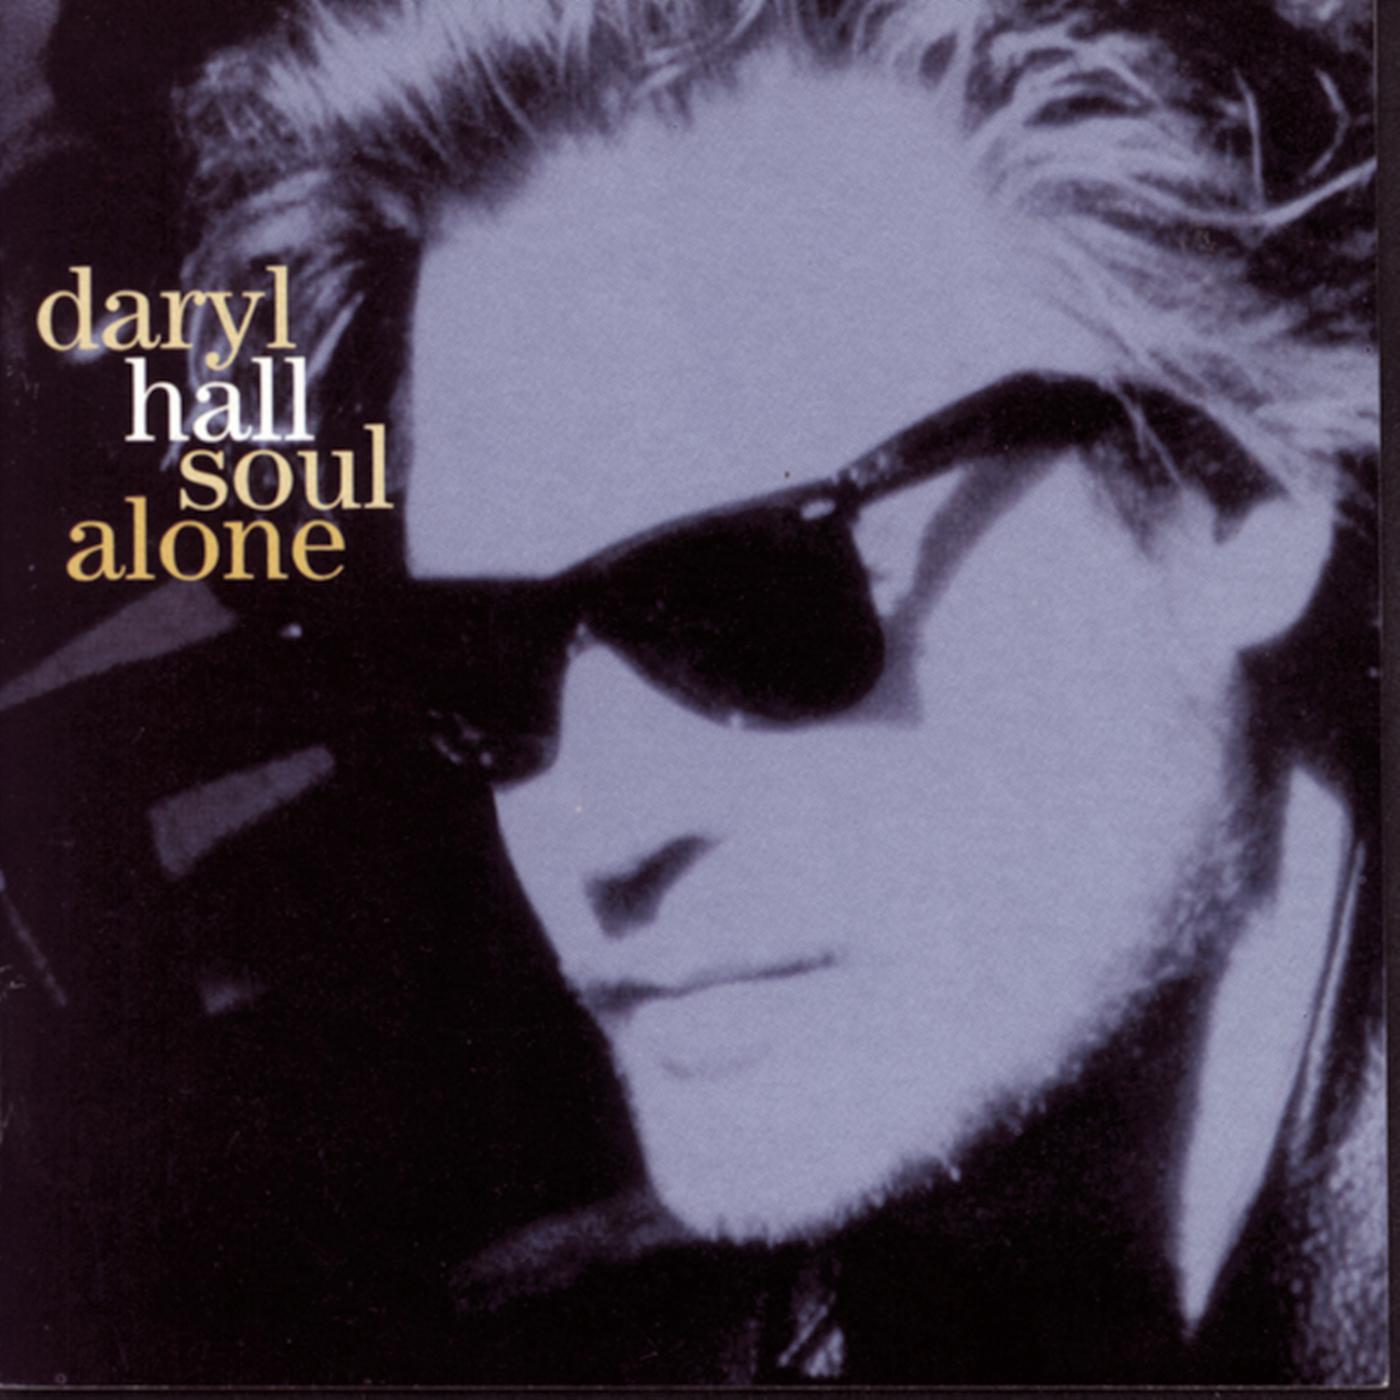 Hall слушать. Daryl Hall Soul Alone. Daryl Hall "Sacred Songs". Alone Soul. Daryl Hall Soul Alone 1993 Japan Remaster.